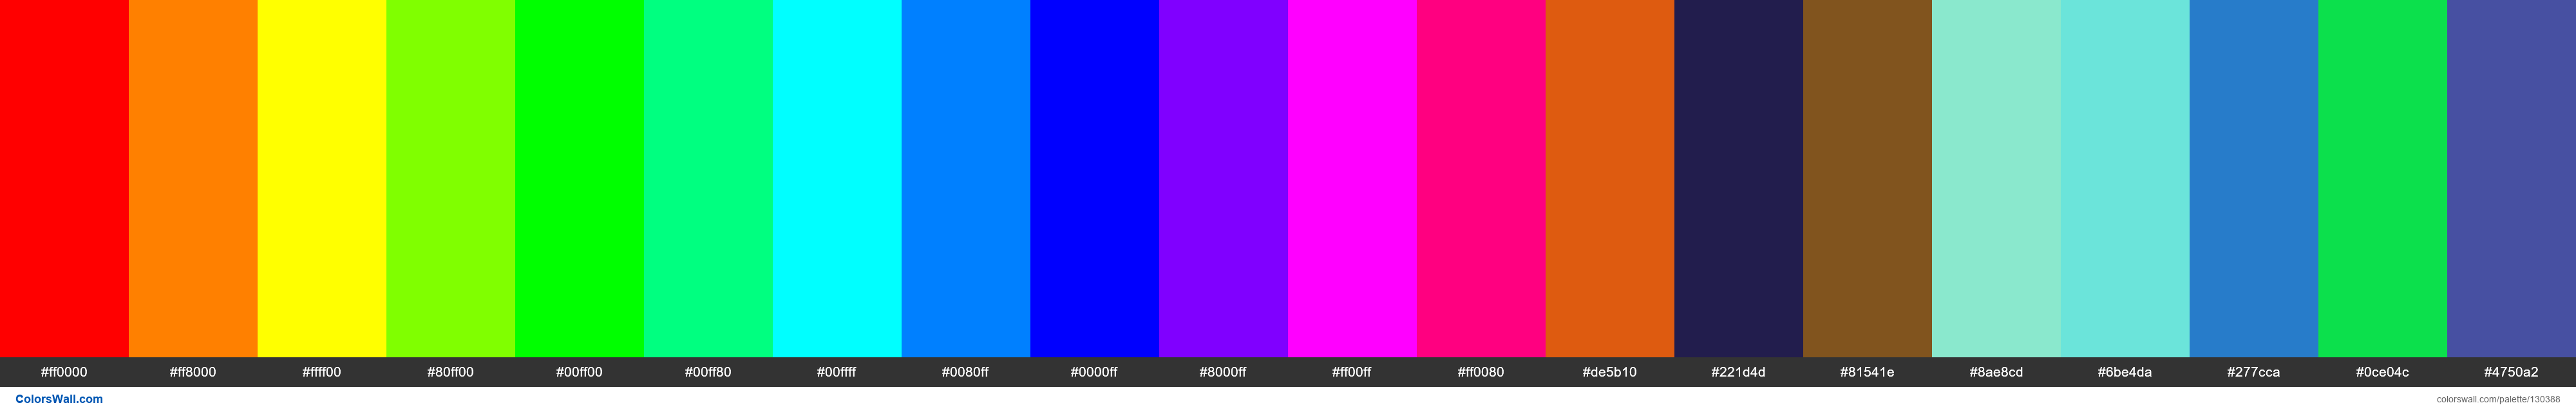 asdfghj-colors-palette-ff0000-ff8000-ffff00-colorswall